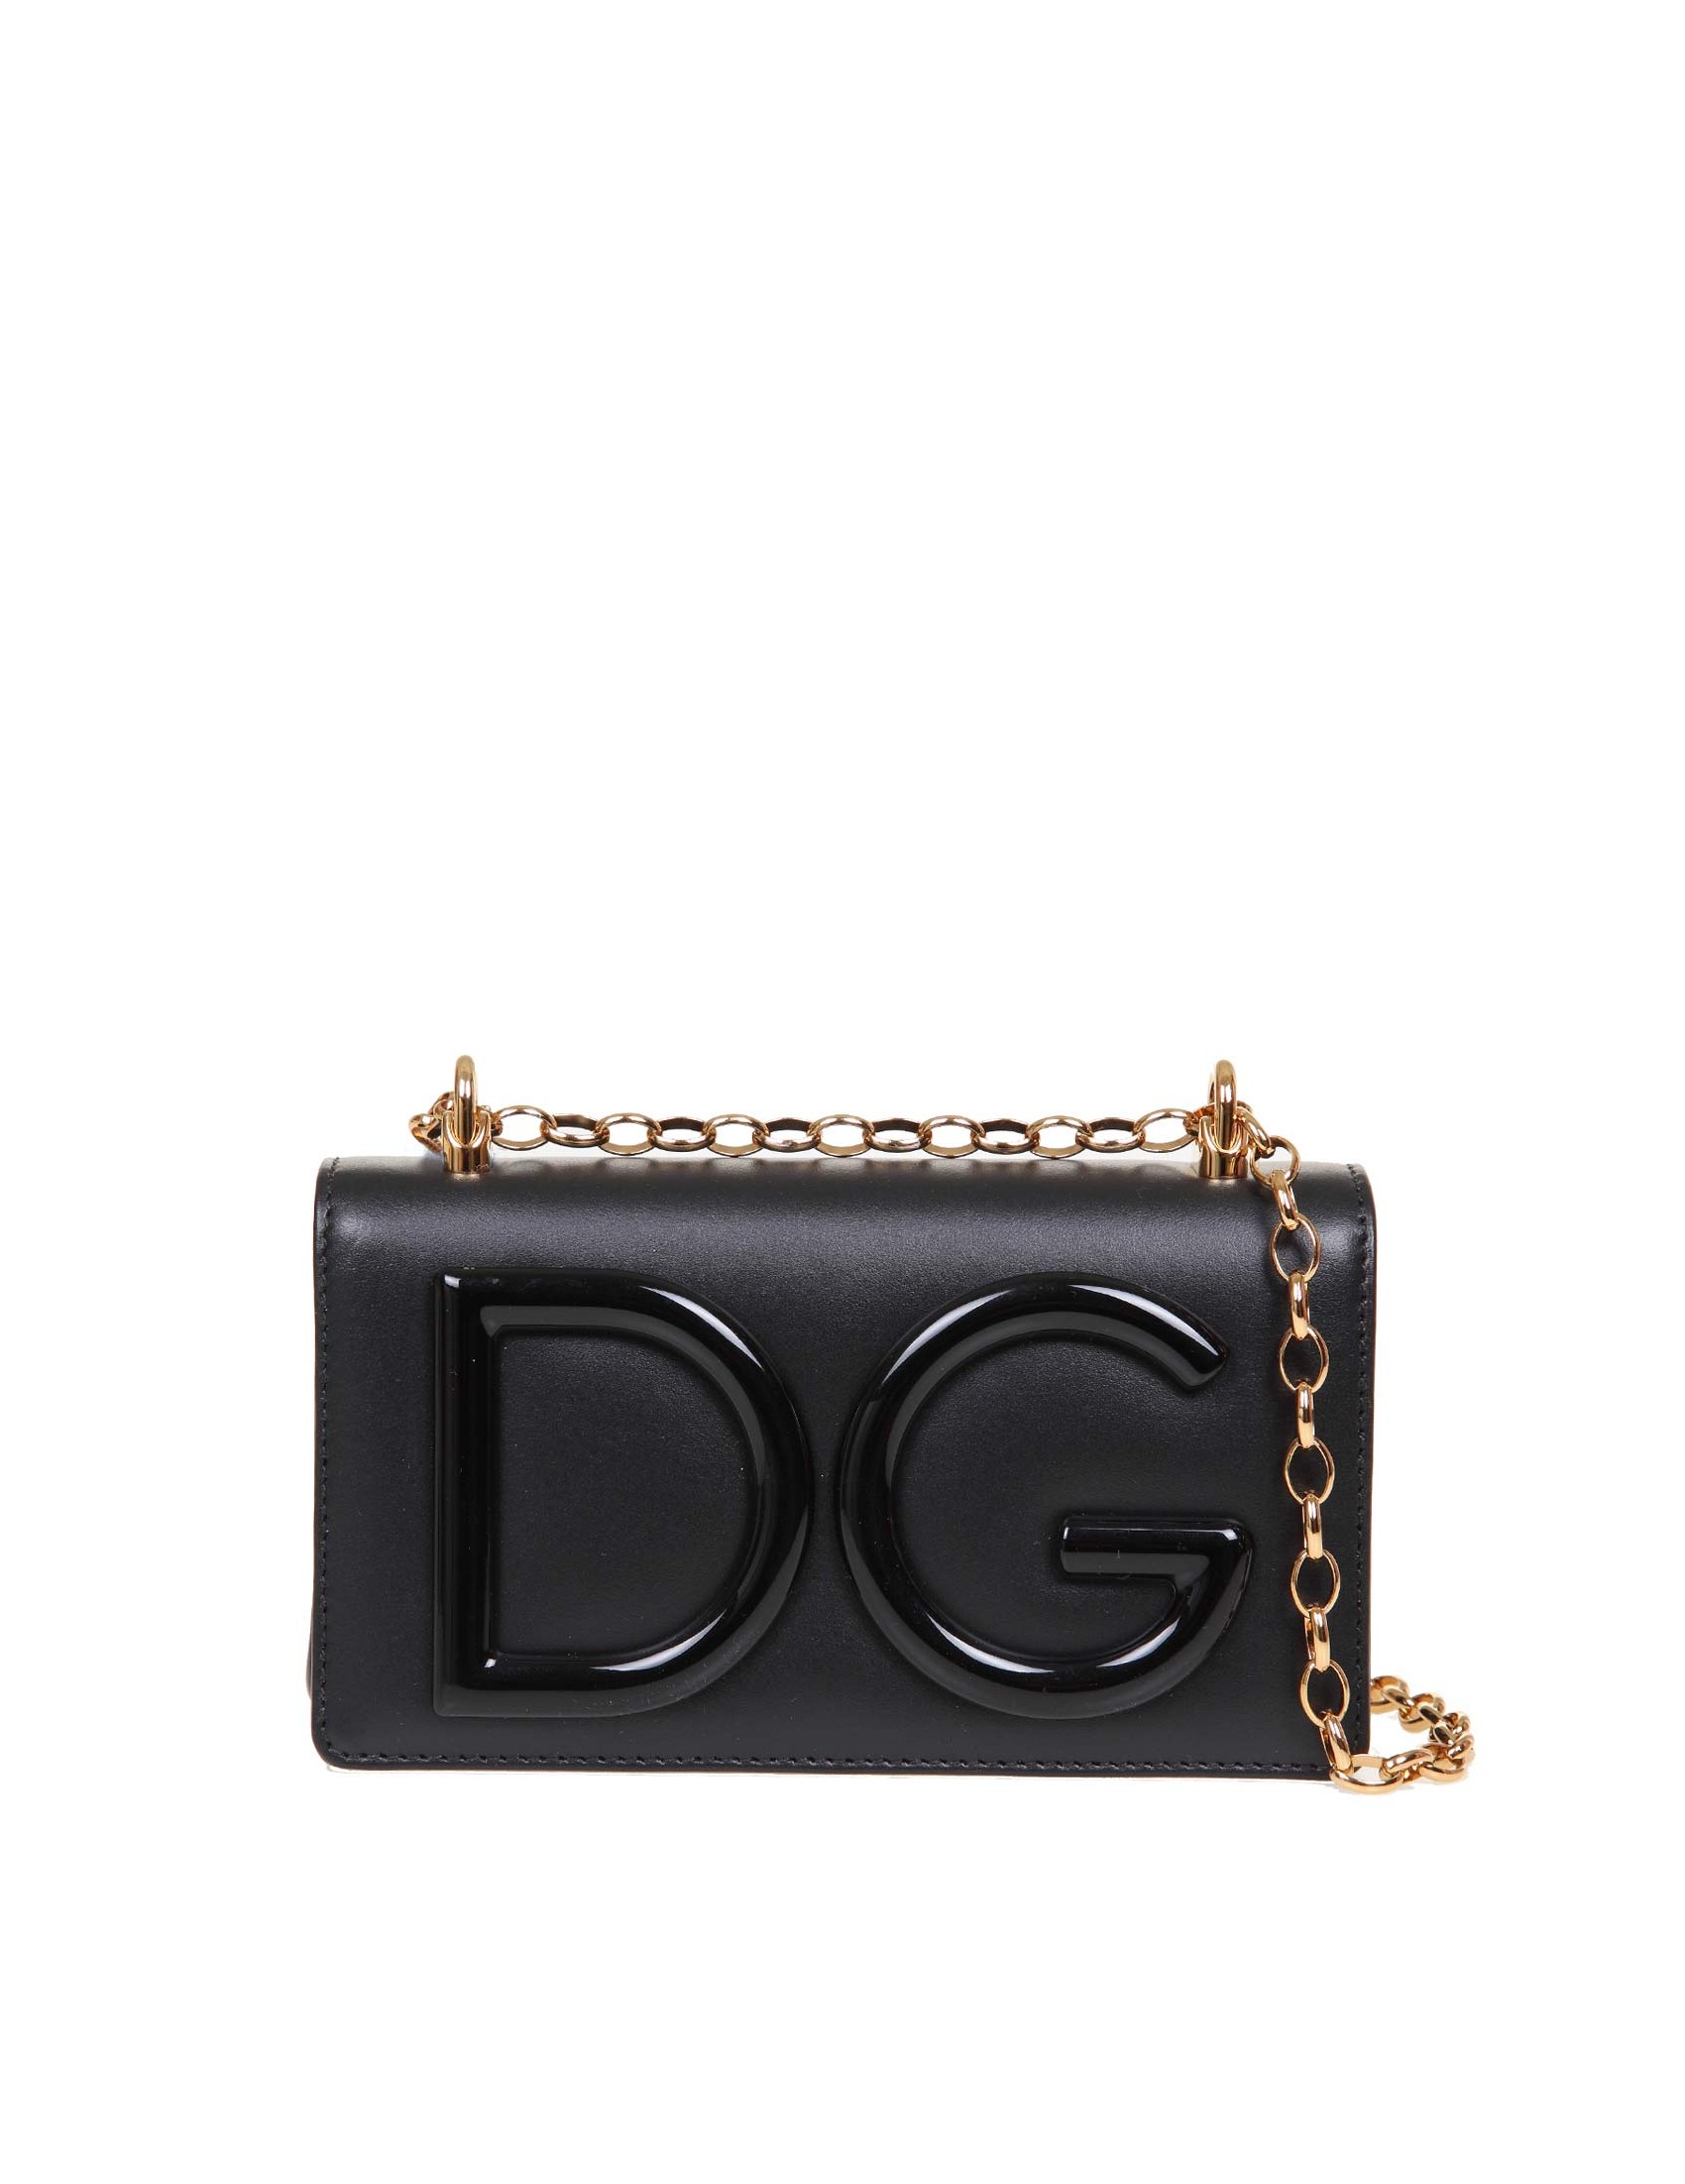 DOLCE & GABBANA Women's Bags Shoulder Bag Black NIB Authentic | eBay